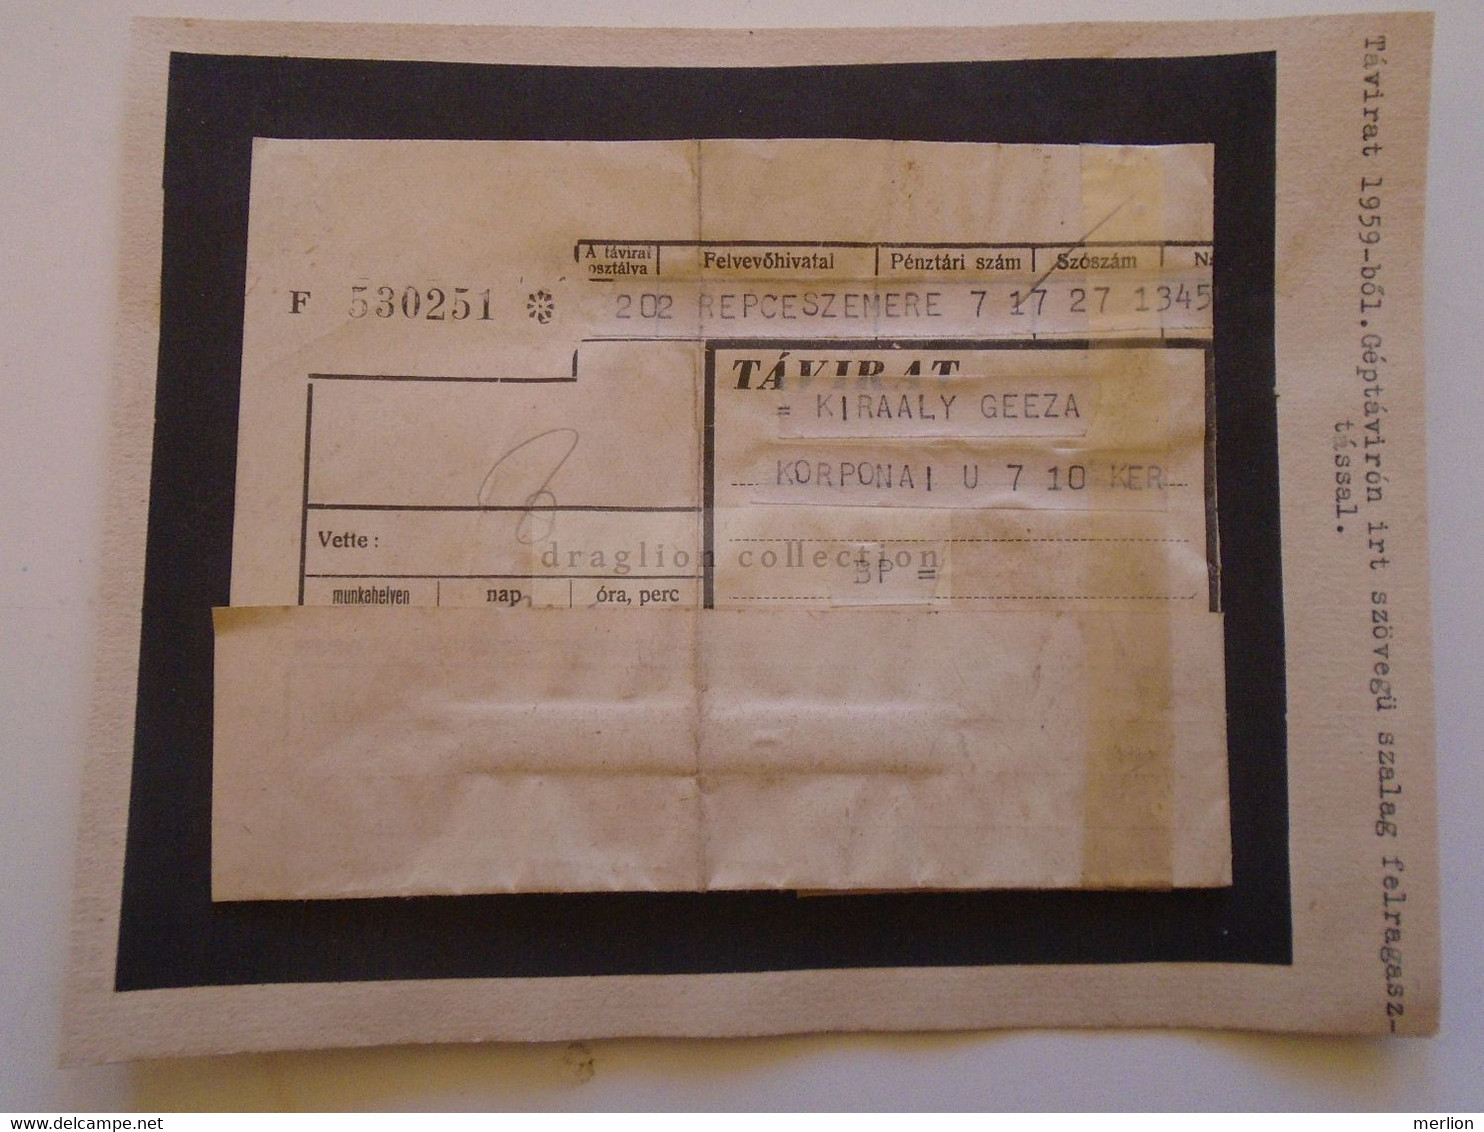 ZA120.2  HUNGARY  Tavirat Telegraph Telegram Répceszemere  1959 - Telégrafos